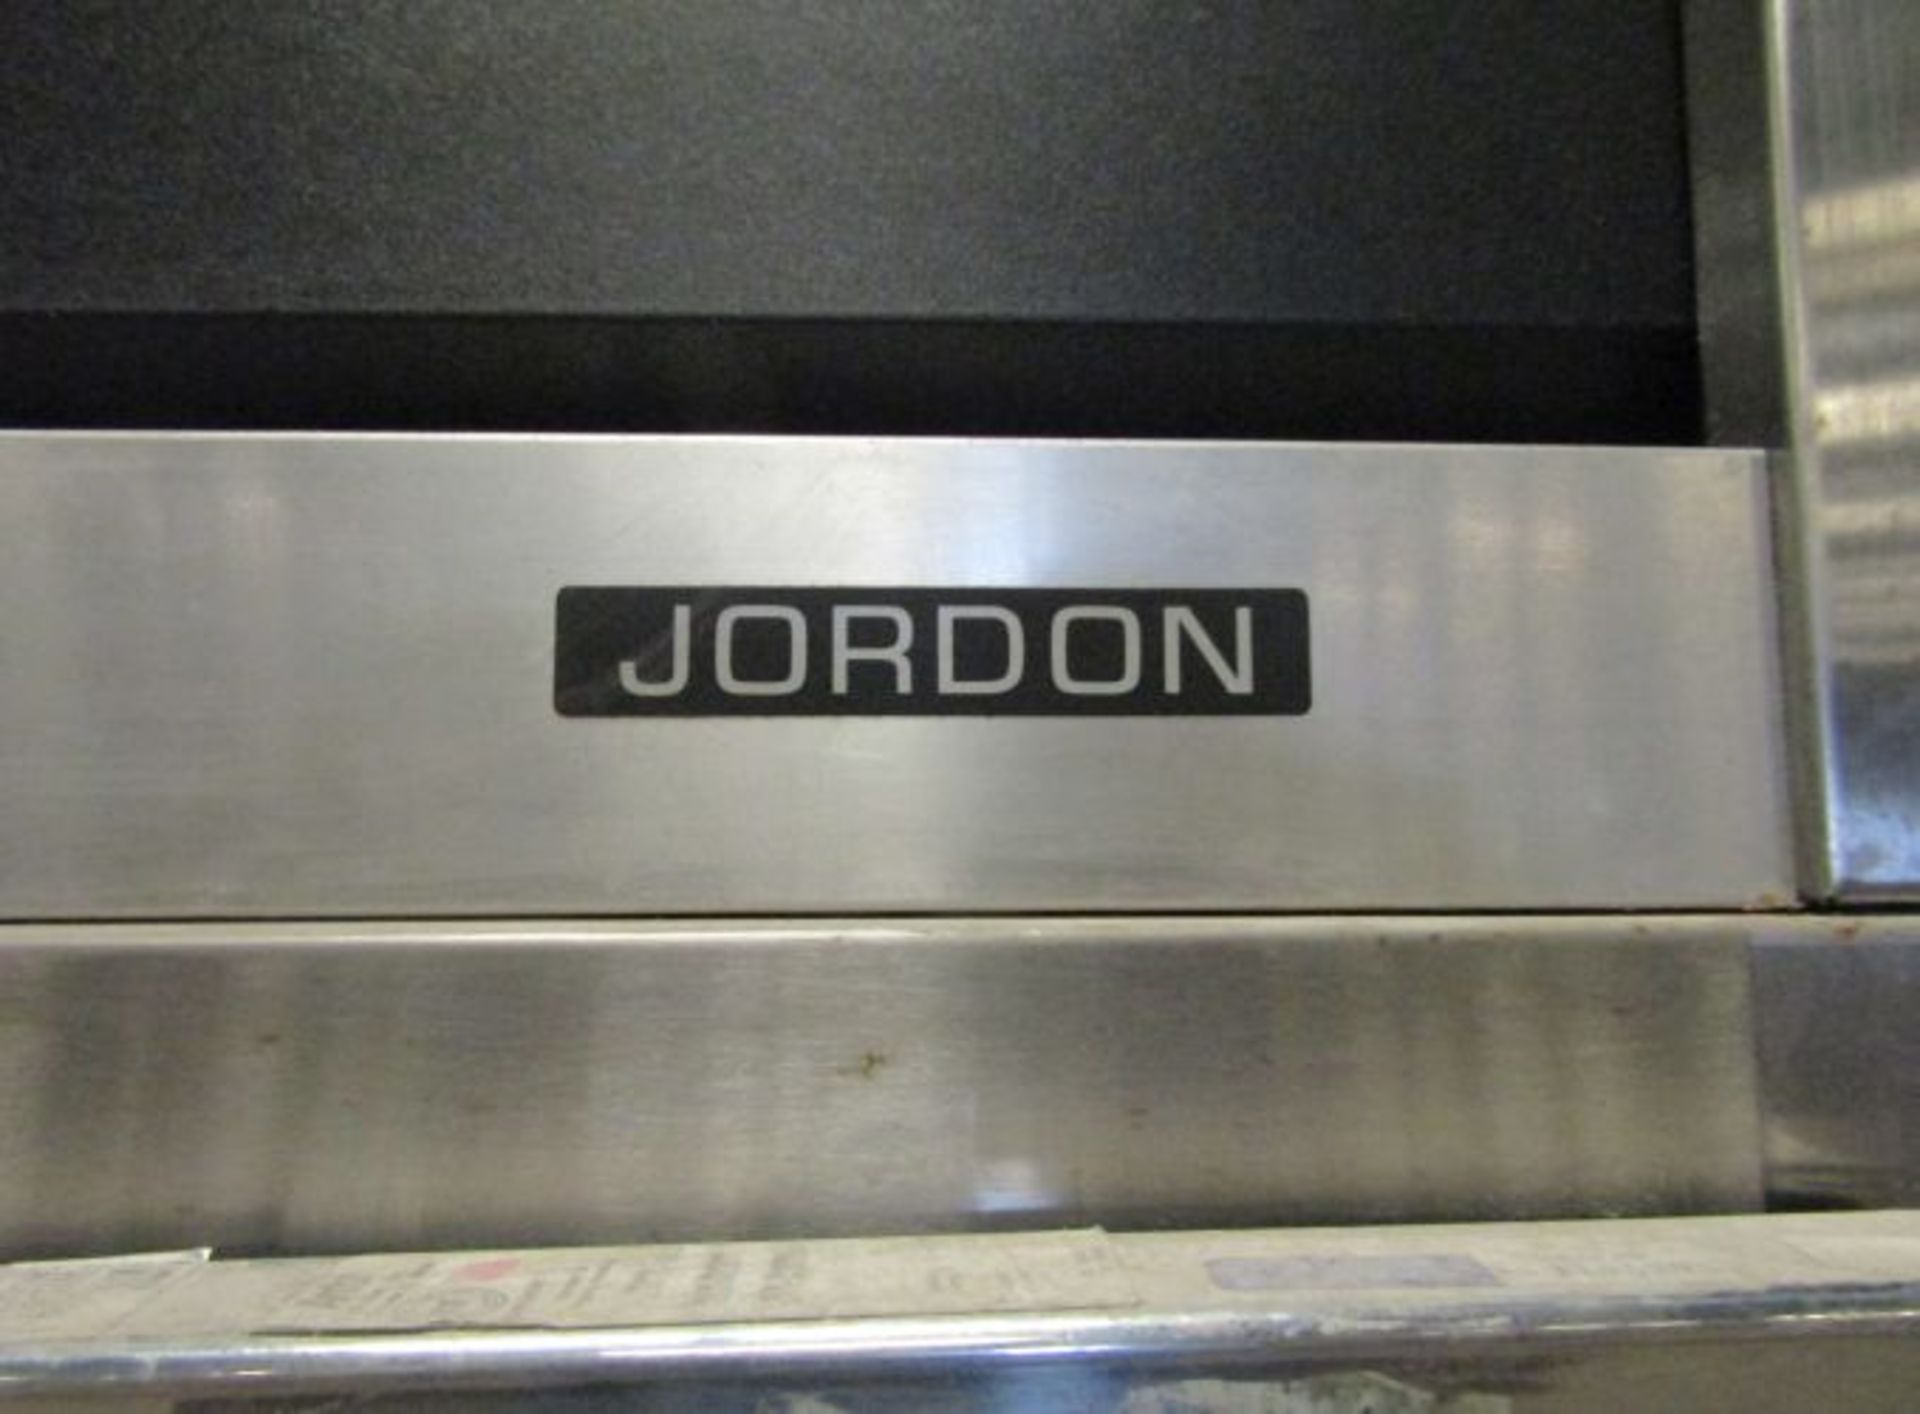 Jordon Commercial Refrigerator Co. refrigerator - Image 7 of 9